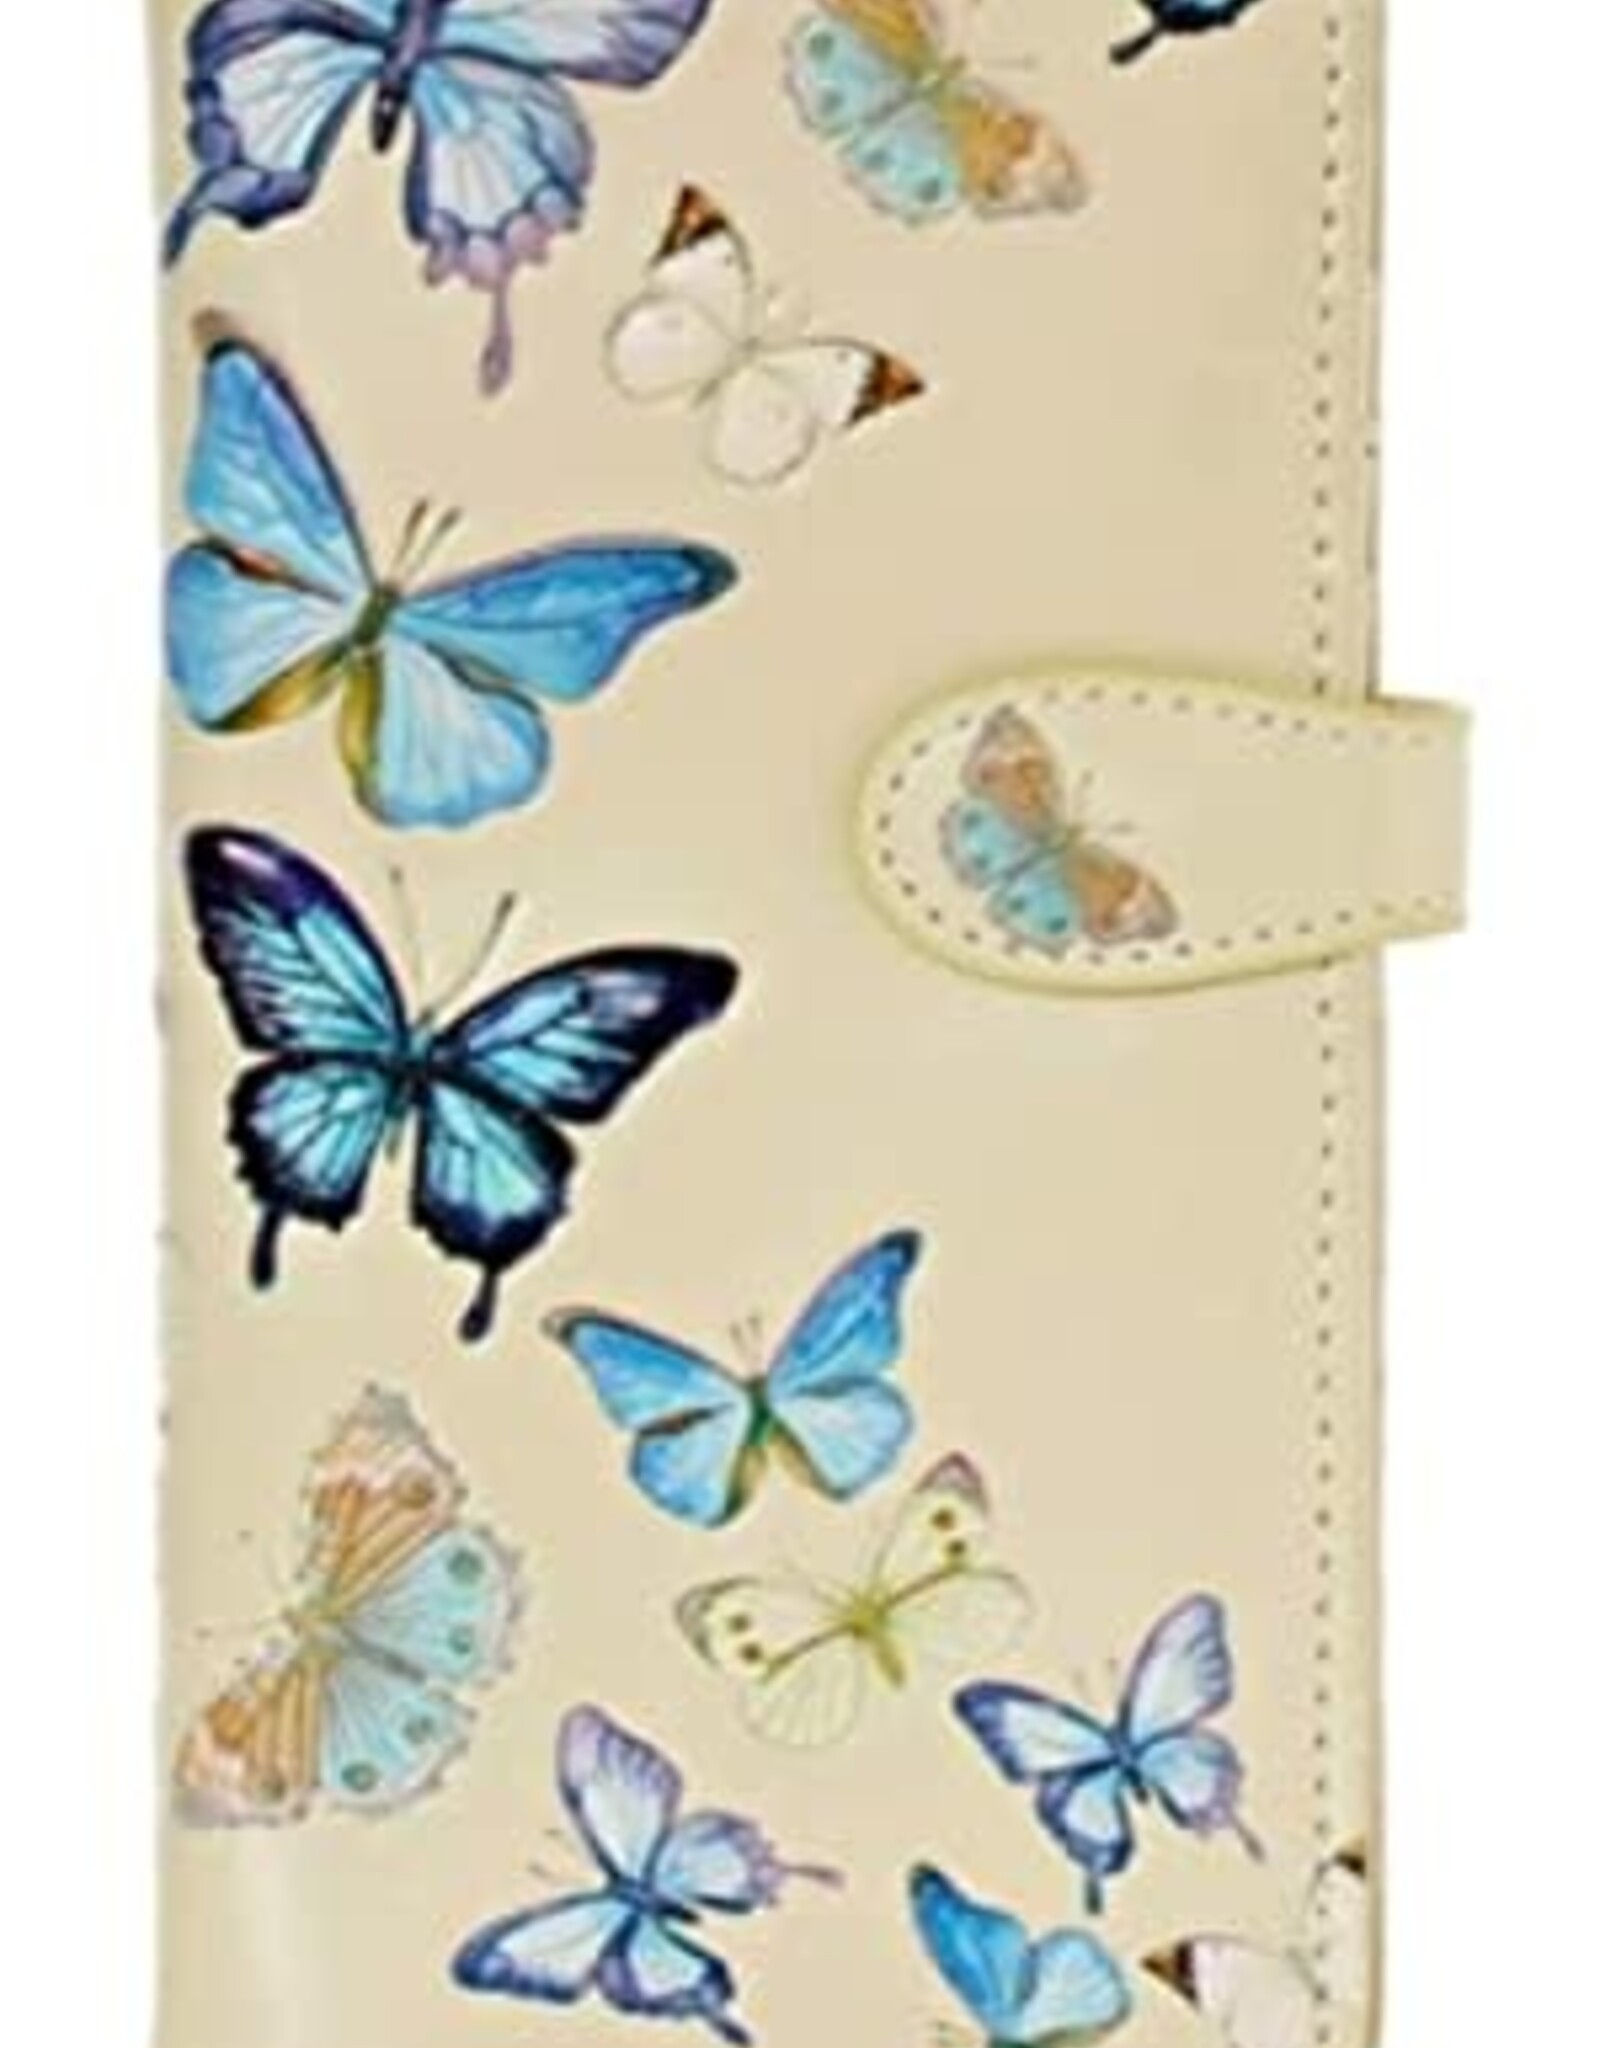 Wallet - Butterflies